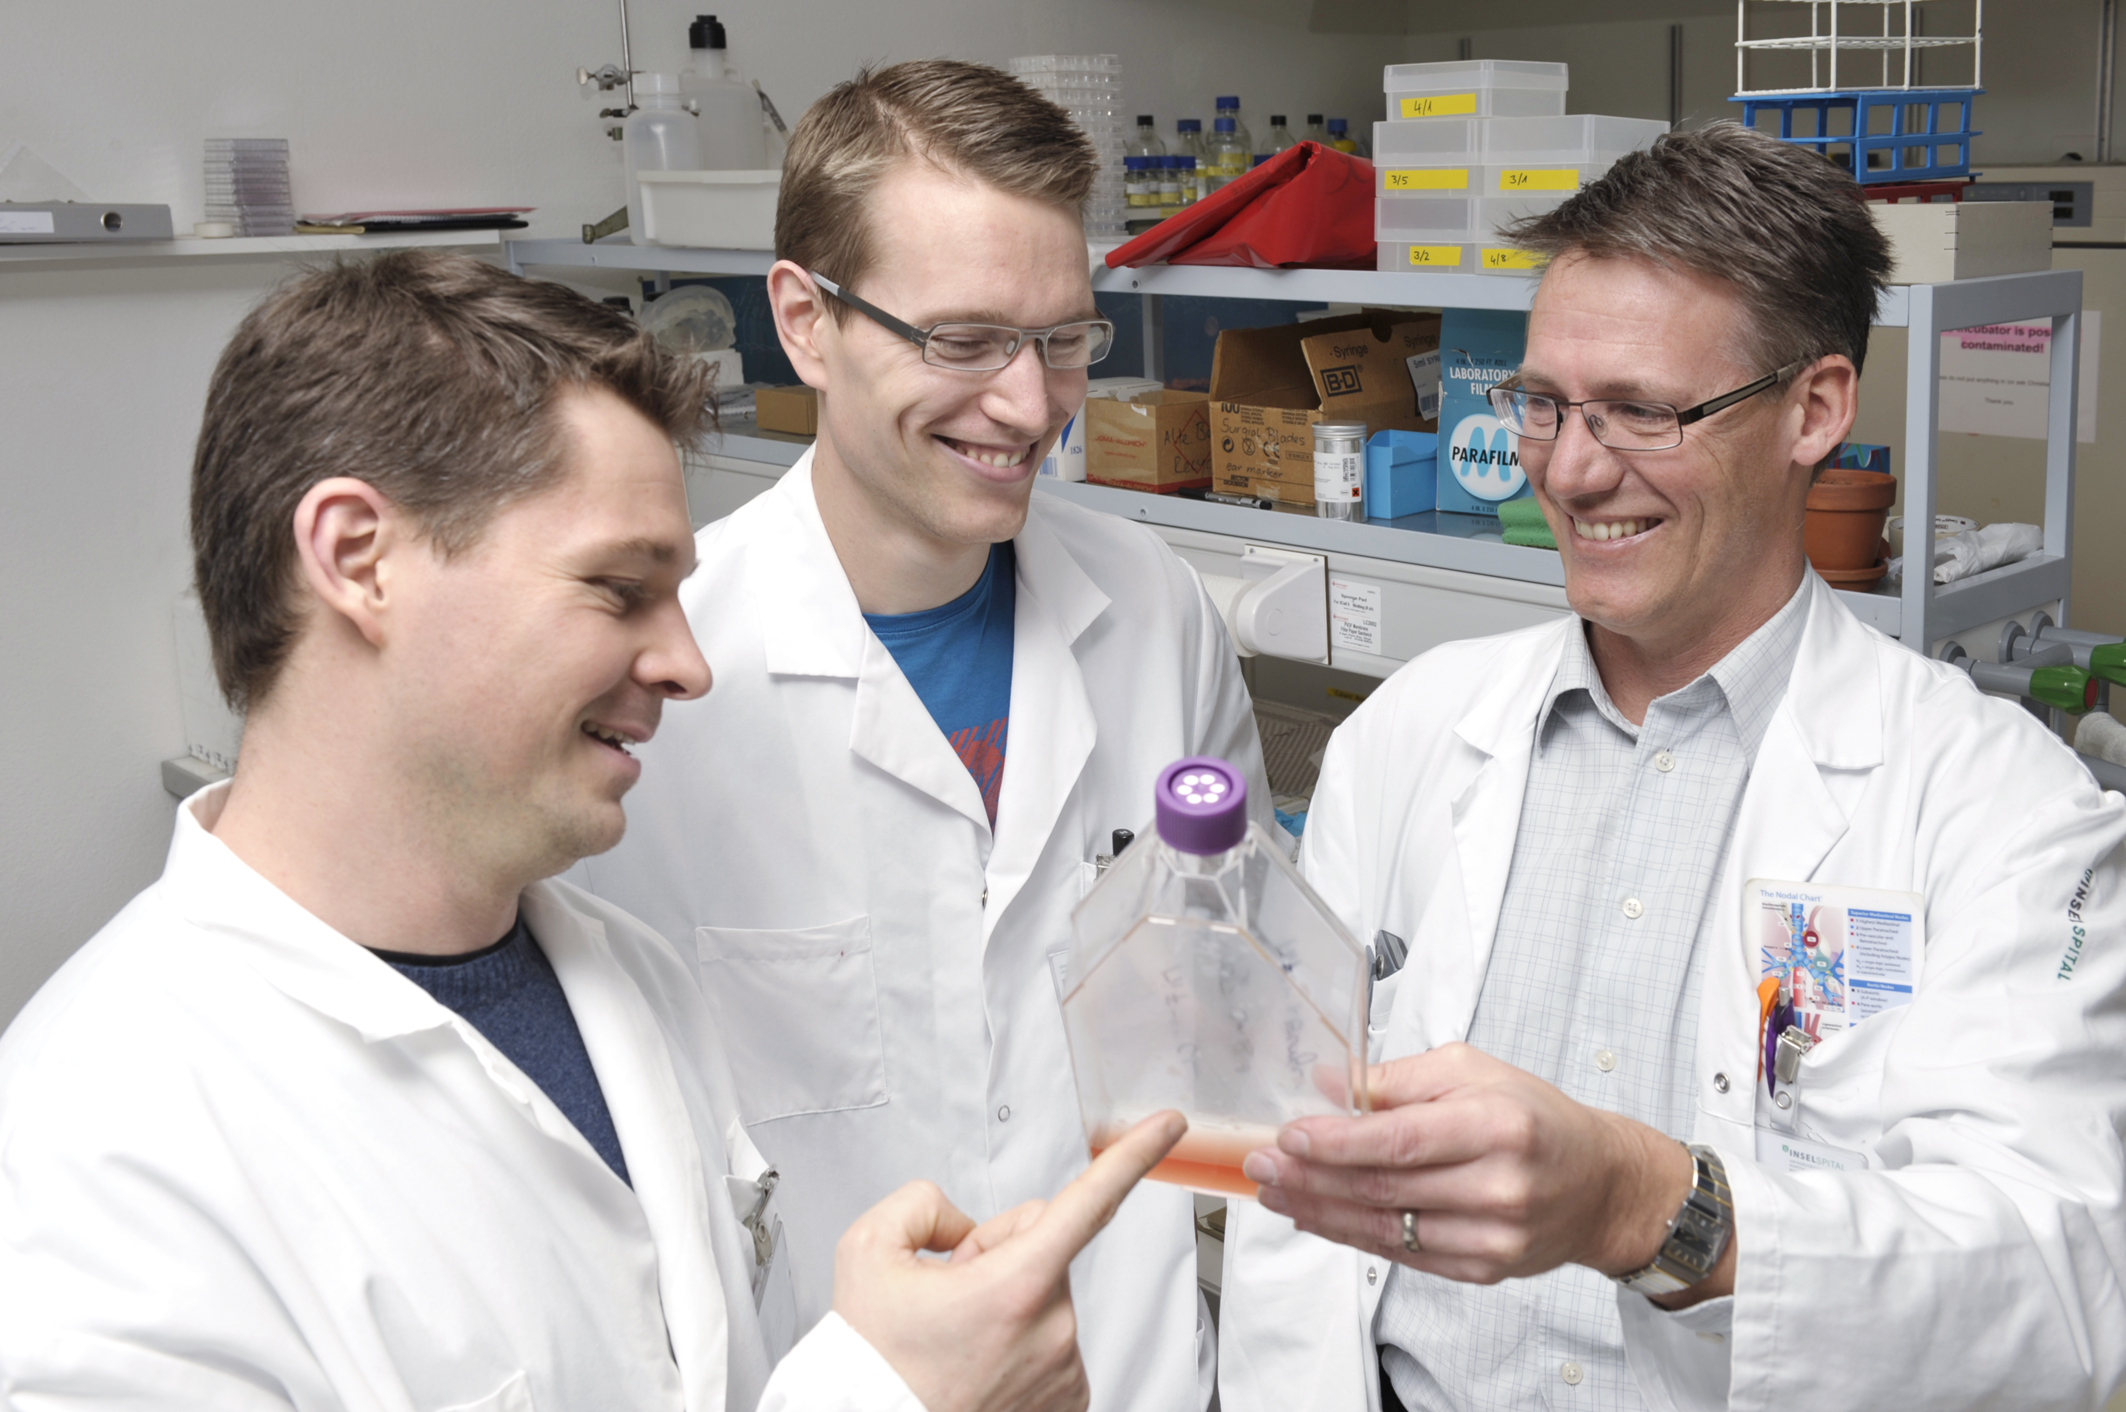 v.l.: Dr. Carsten Riether, Dr. Christian M. Schürch und Prof. Adrian F. Ochsenbein im Labor (Foto: Susi Bürki, Inselspital Bern).